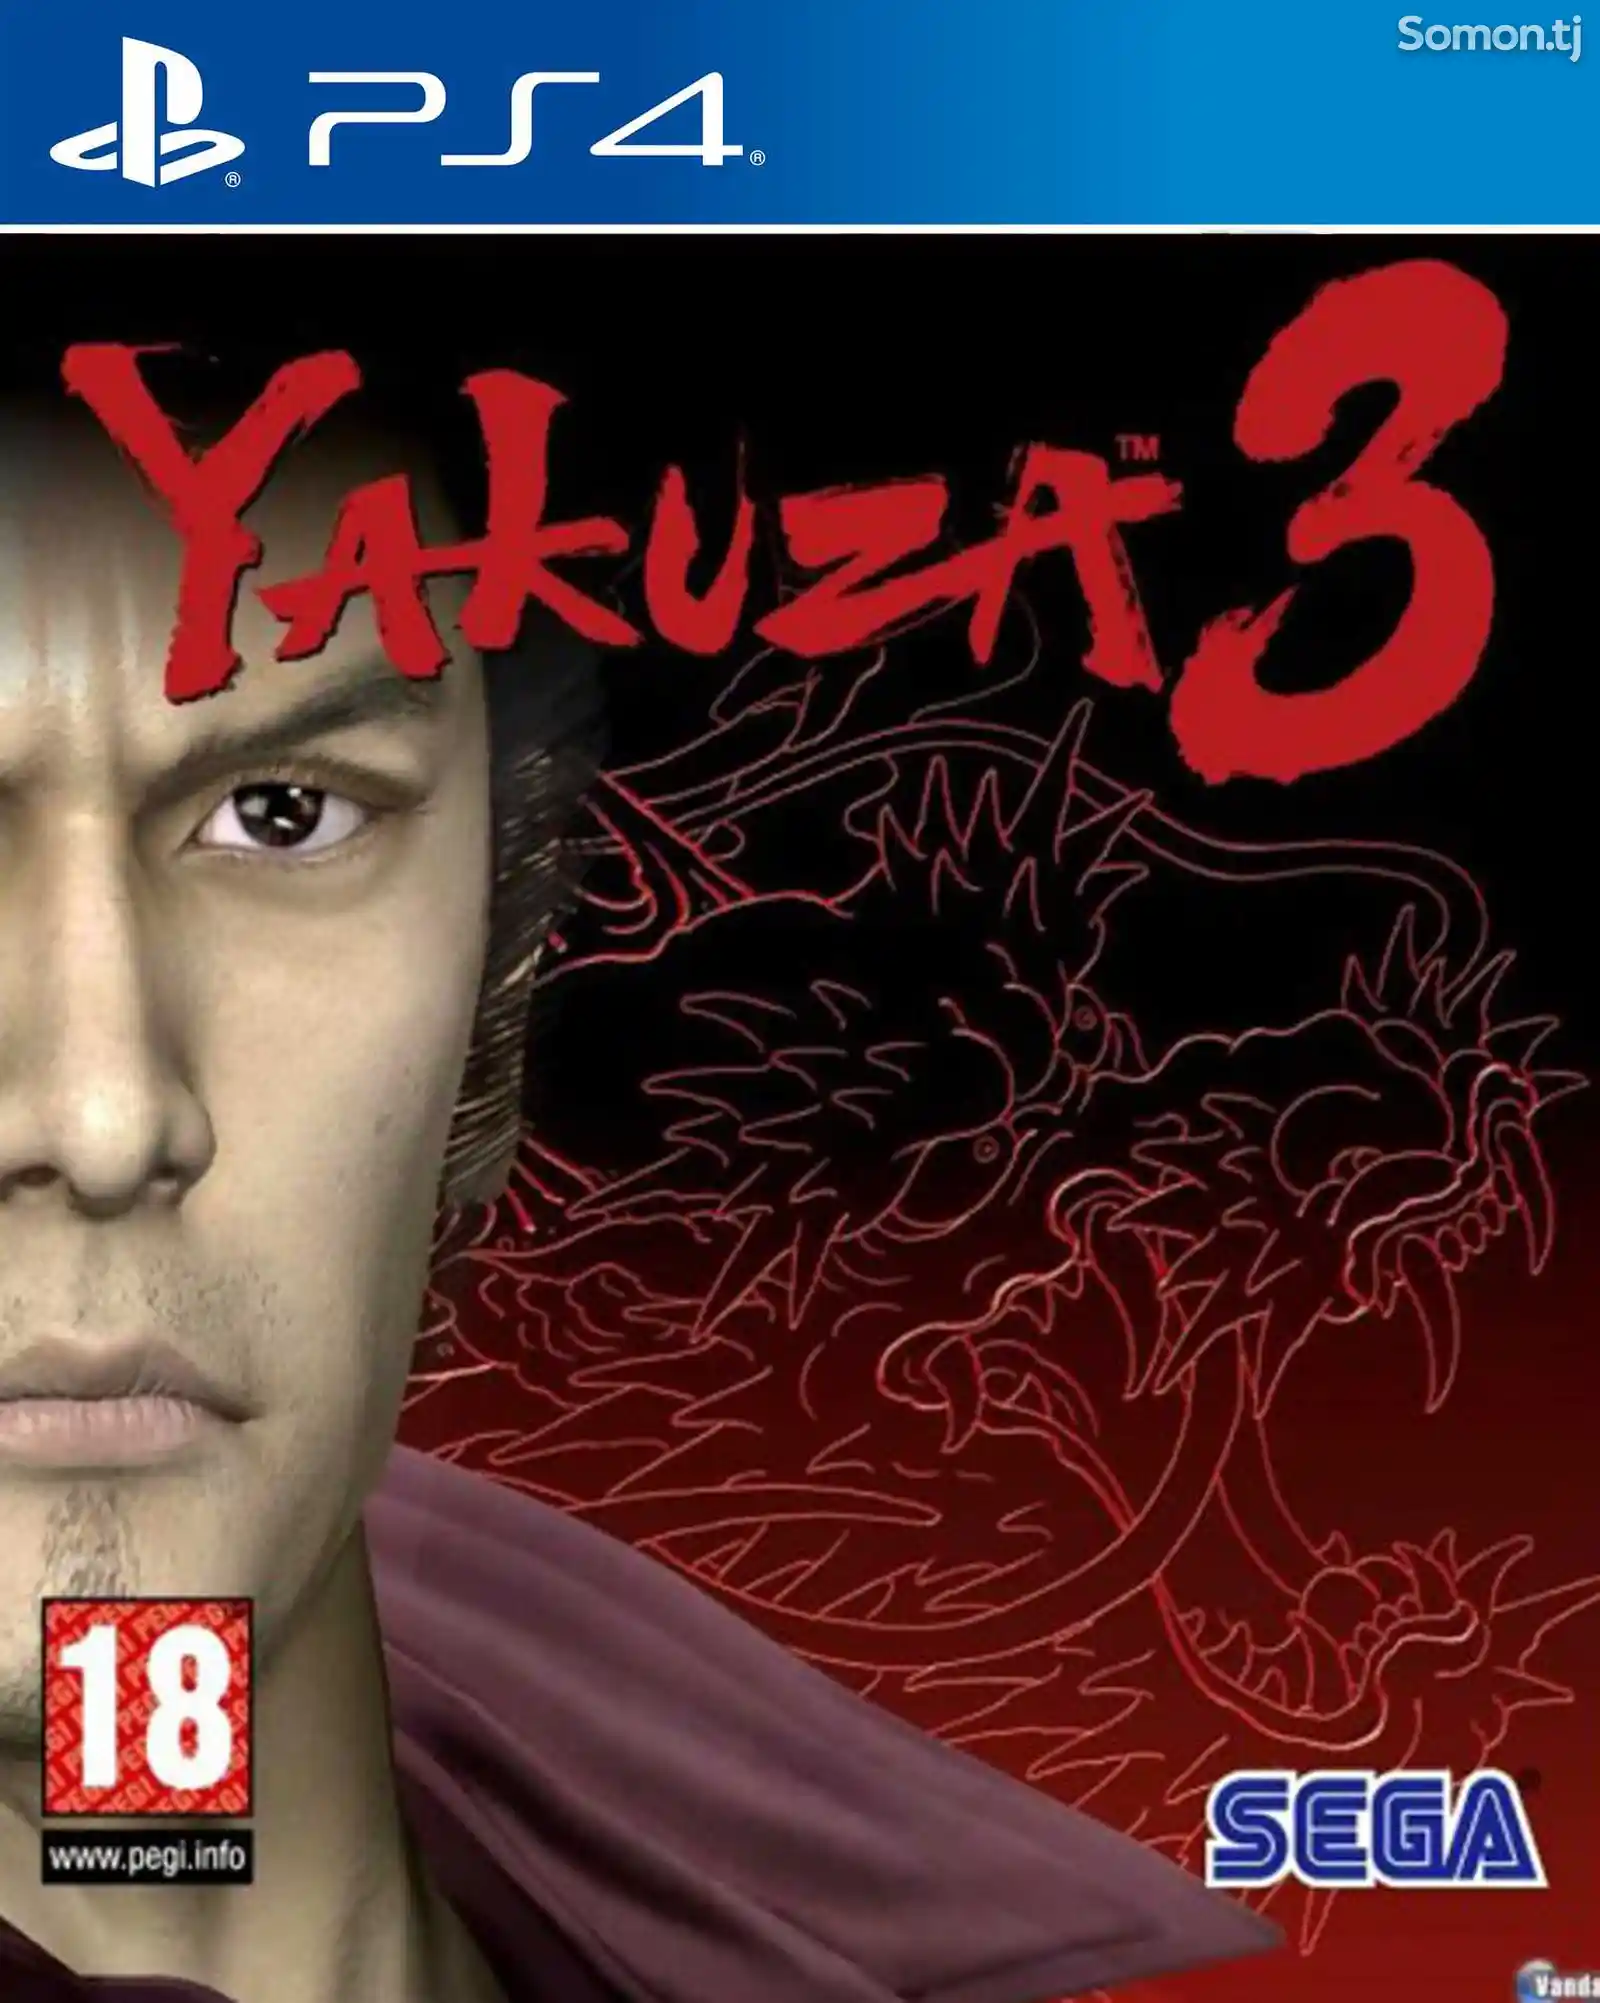 Игра Yakuza 3 для PS-4 / 5.05 / 6.72 / 7.02 / 7.55 / 9.00 /-1